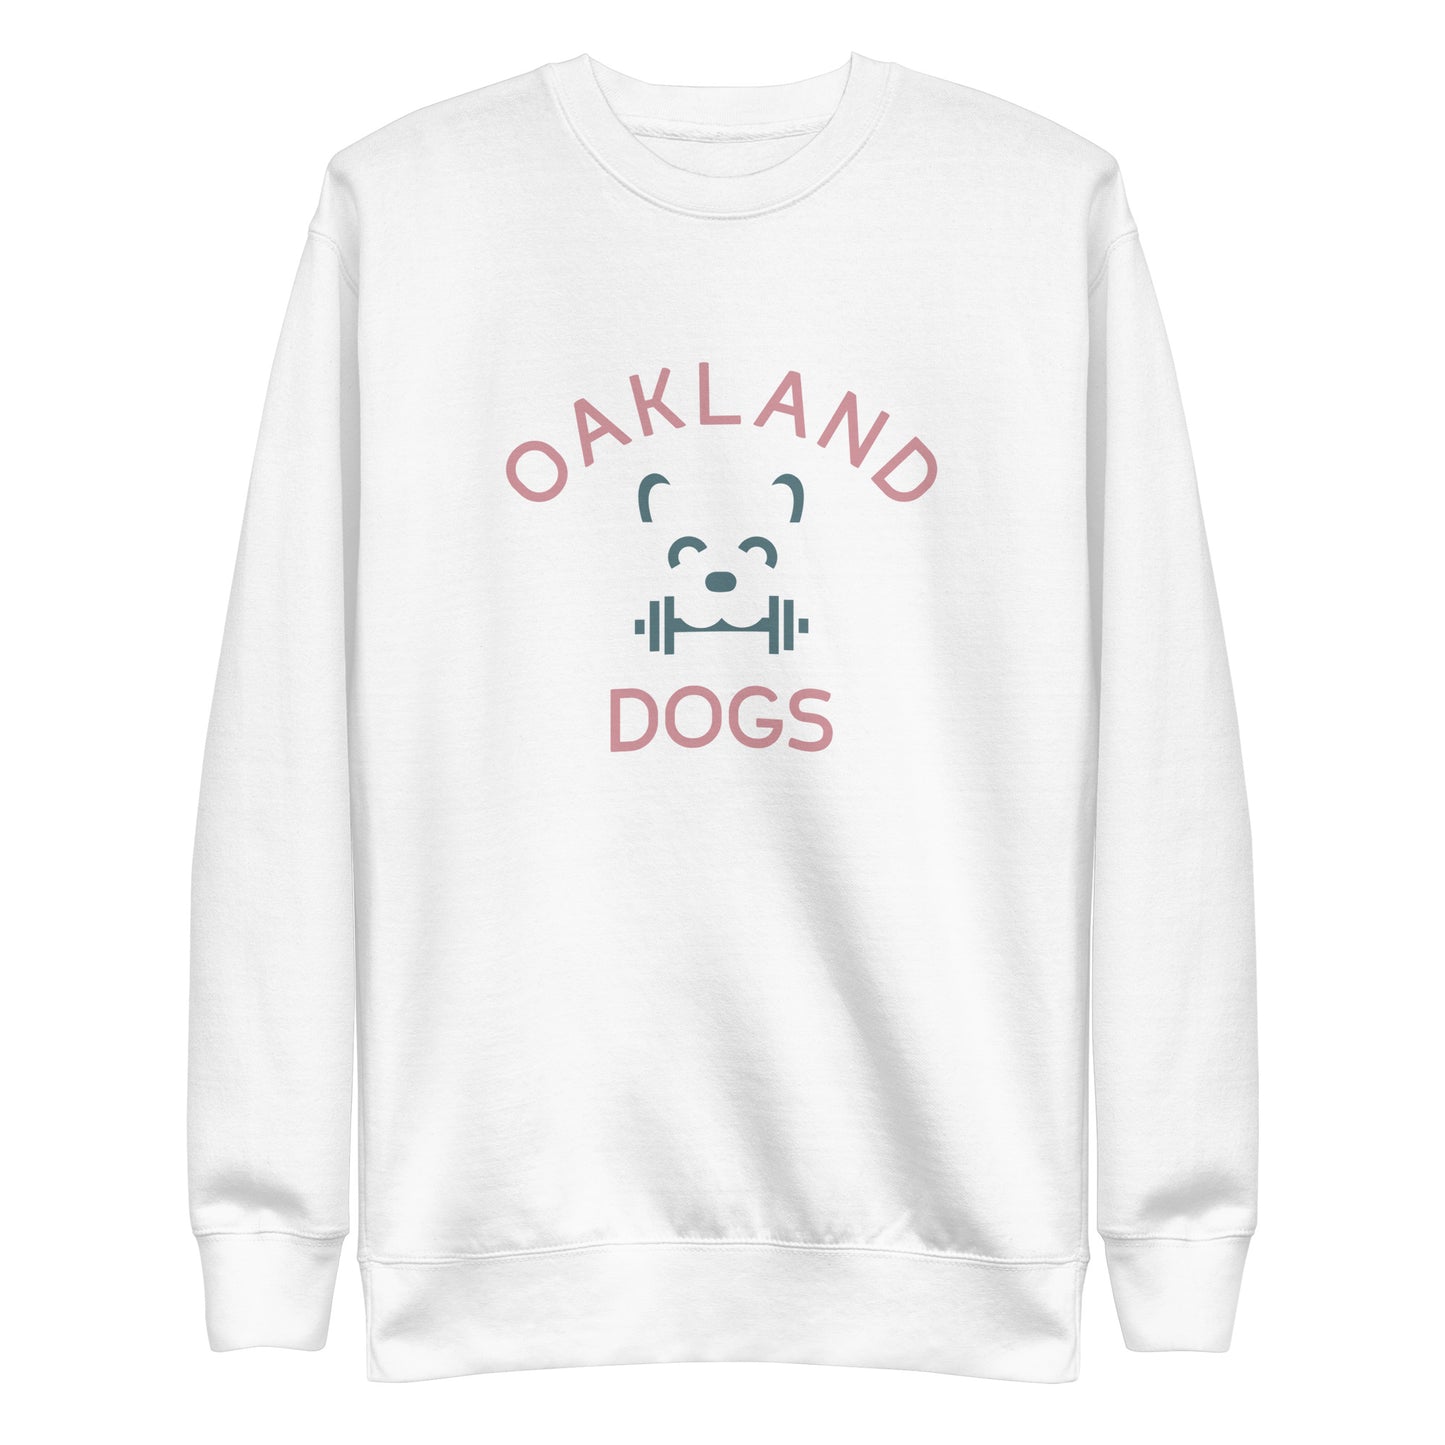 Oakland Dogs Crew